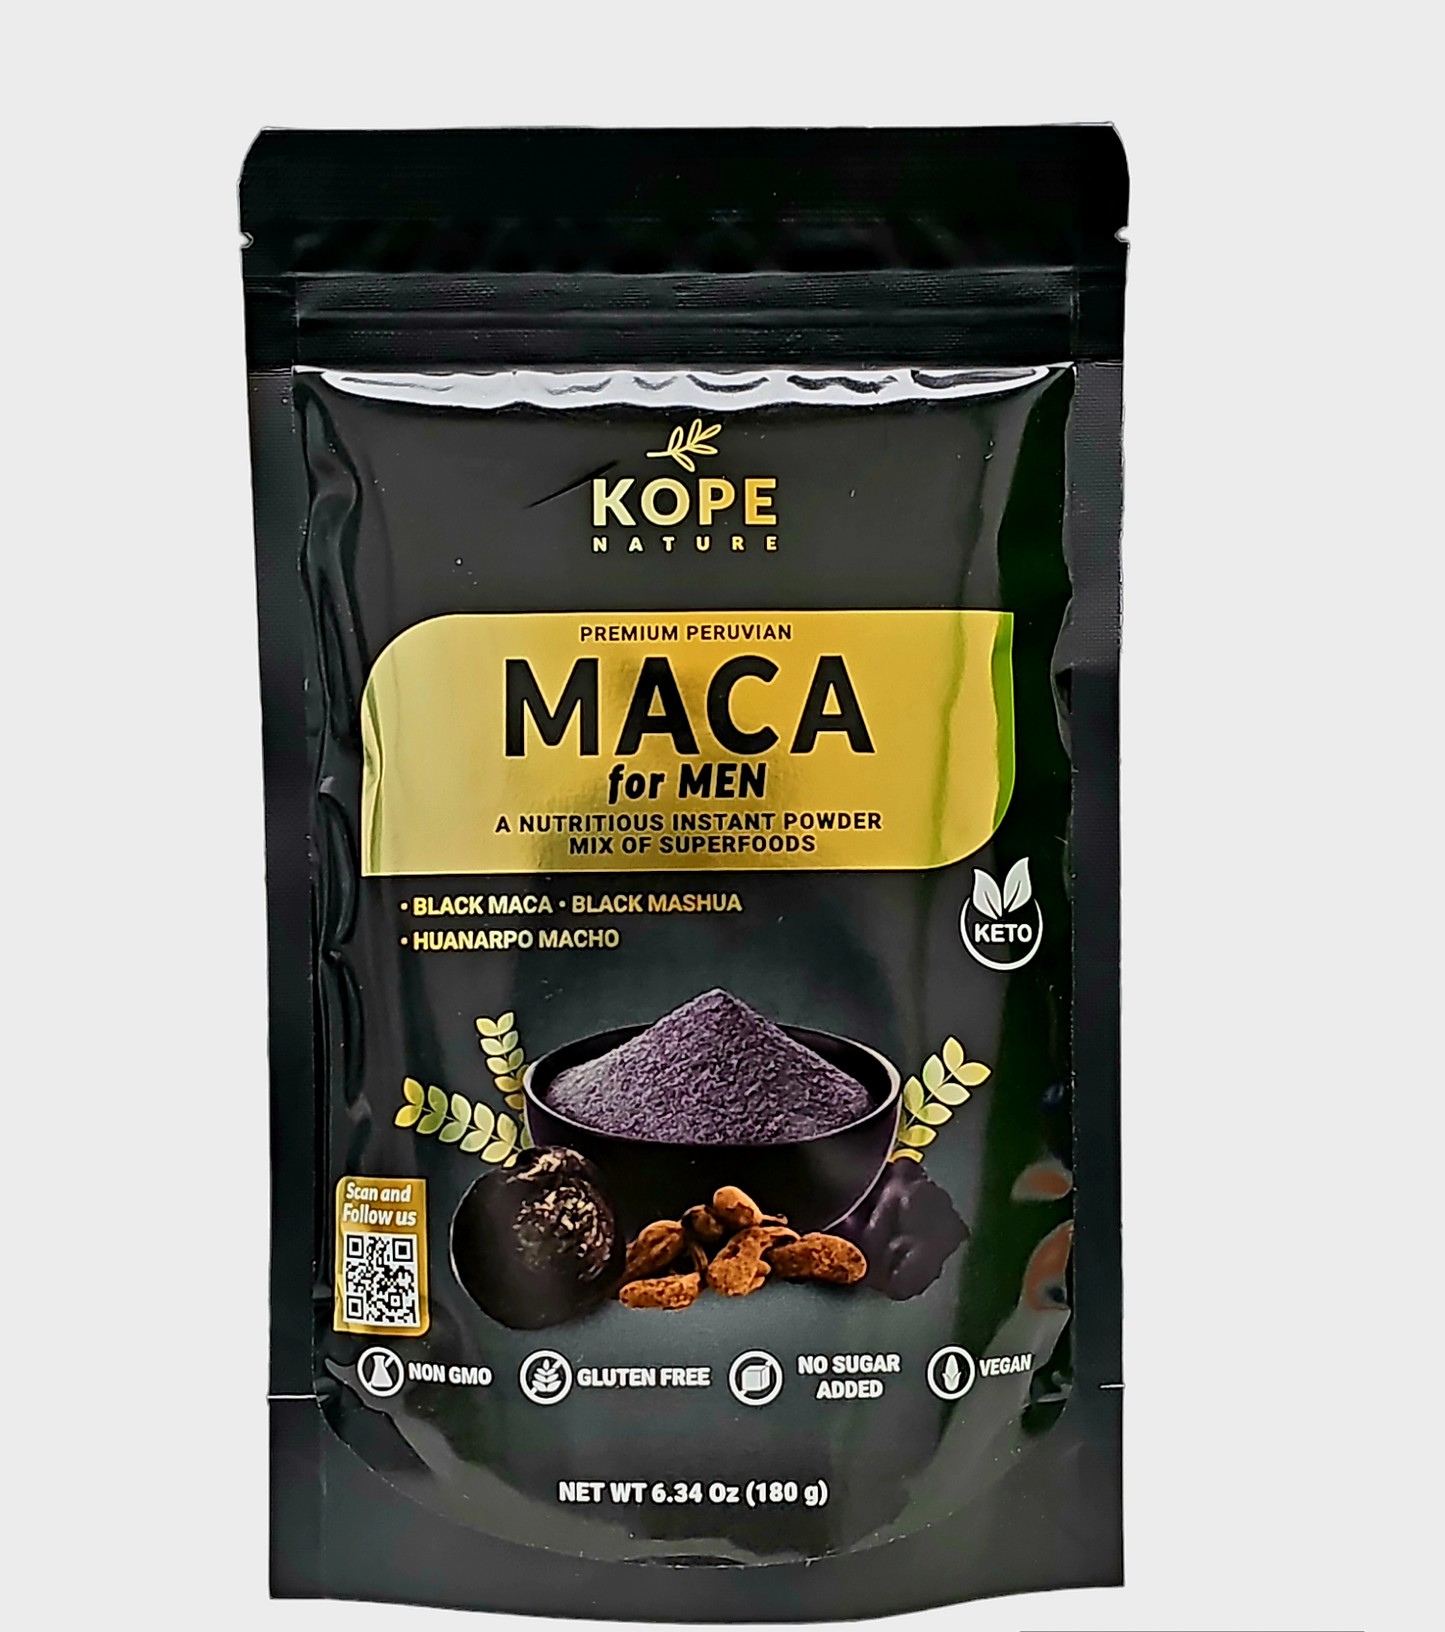 Black Maca for Men superfoods